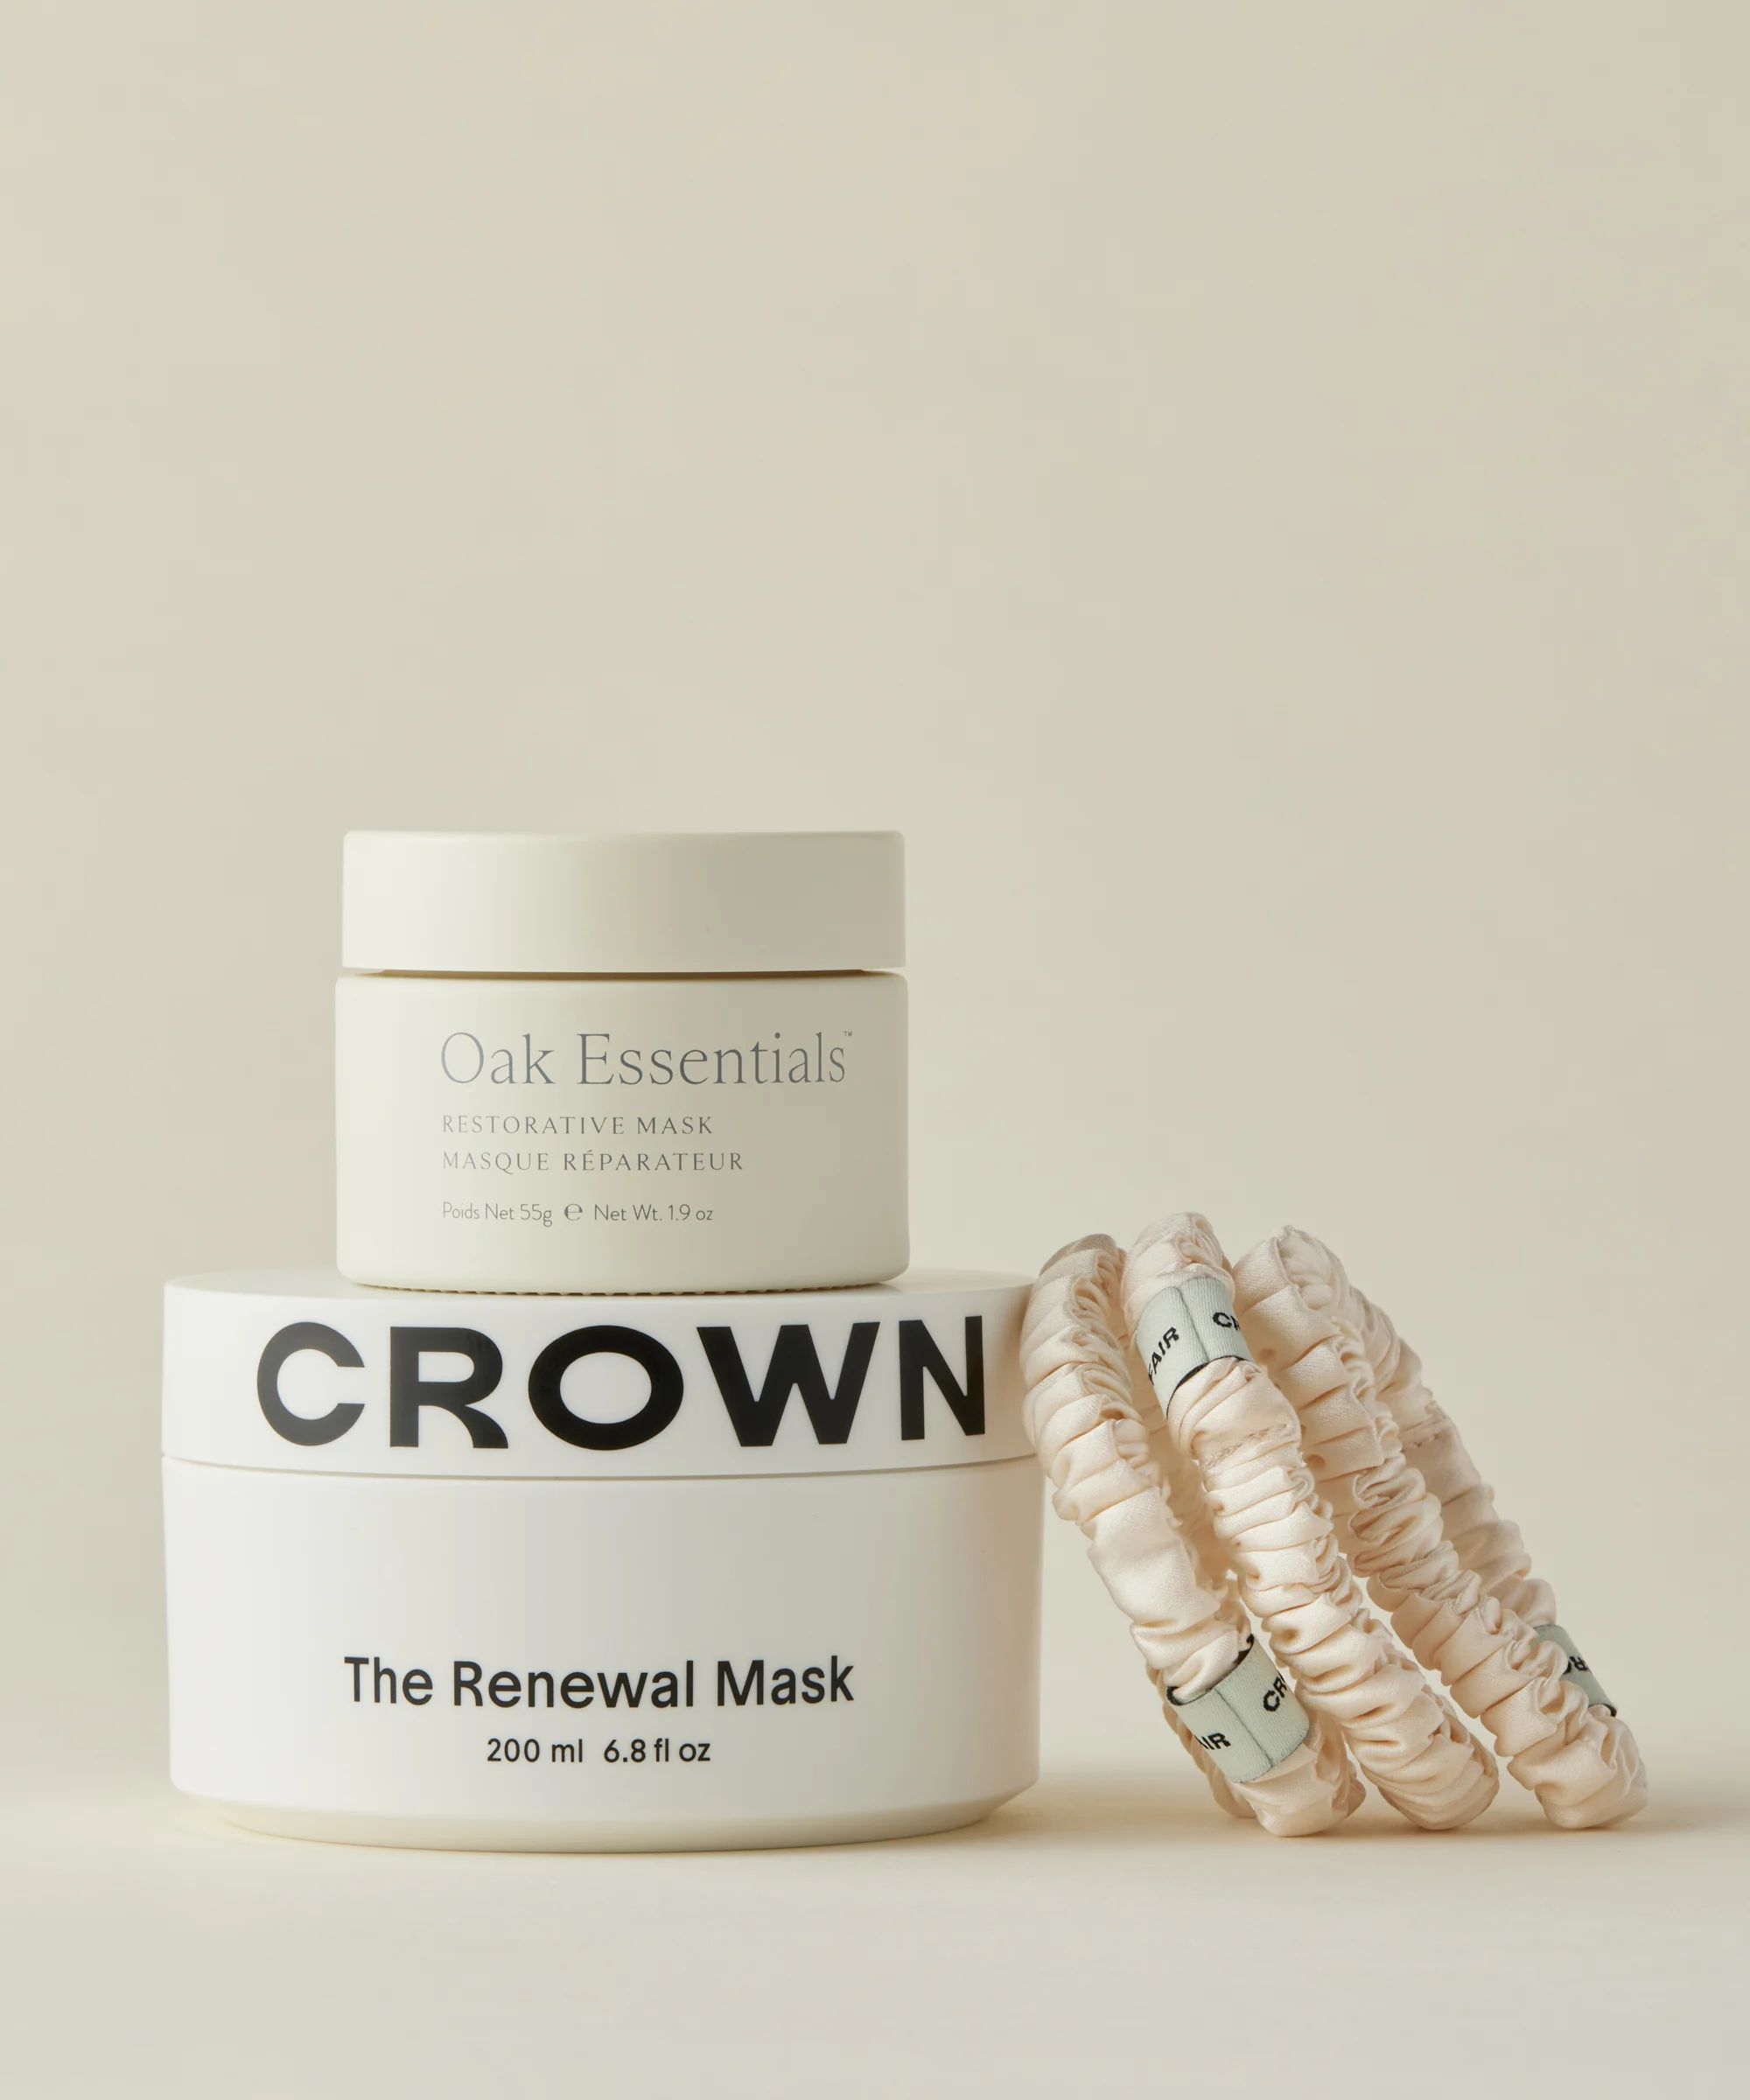 Oak Essentials x Crown Affair Gift Set | Oak Essentials